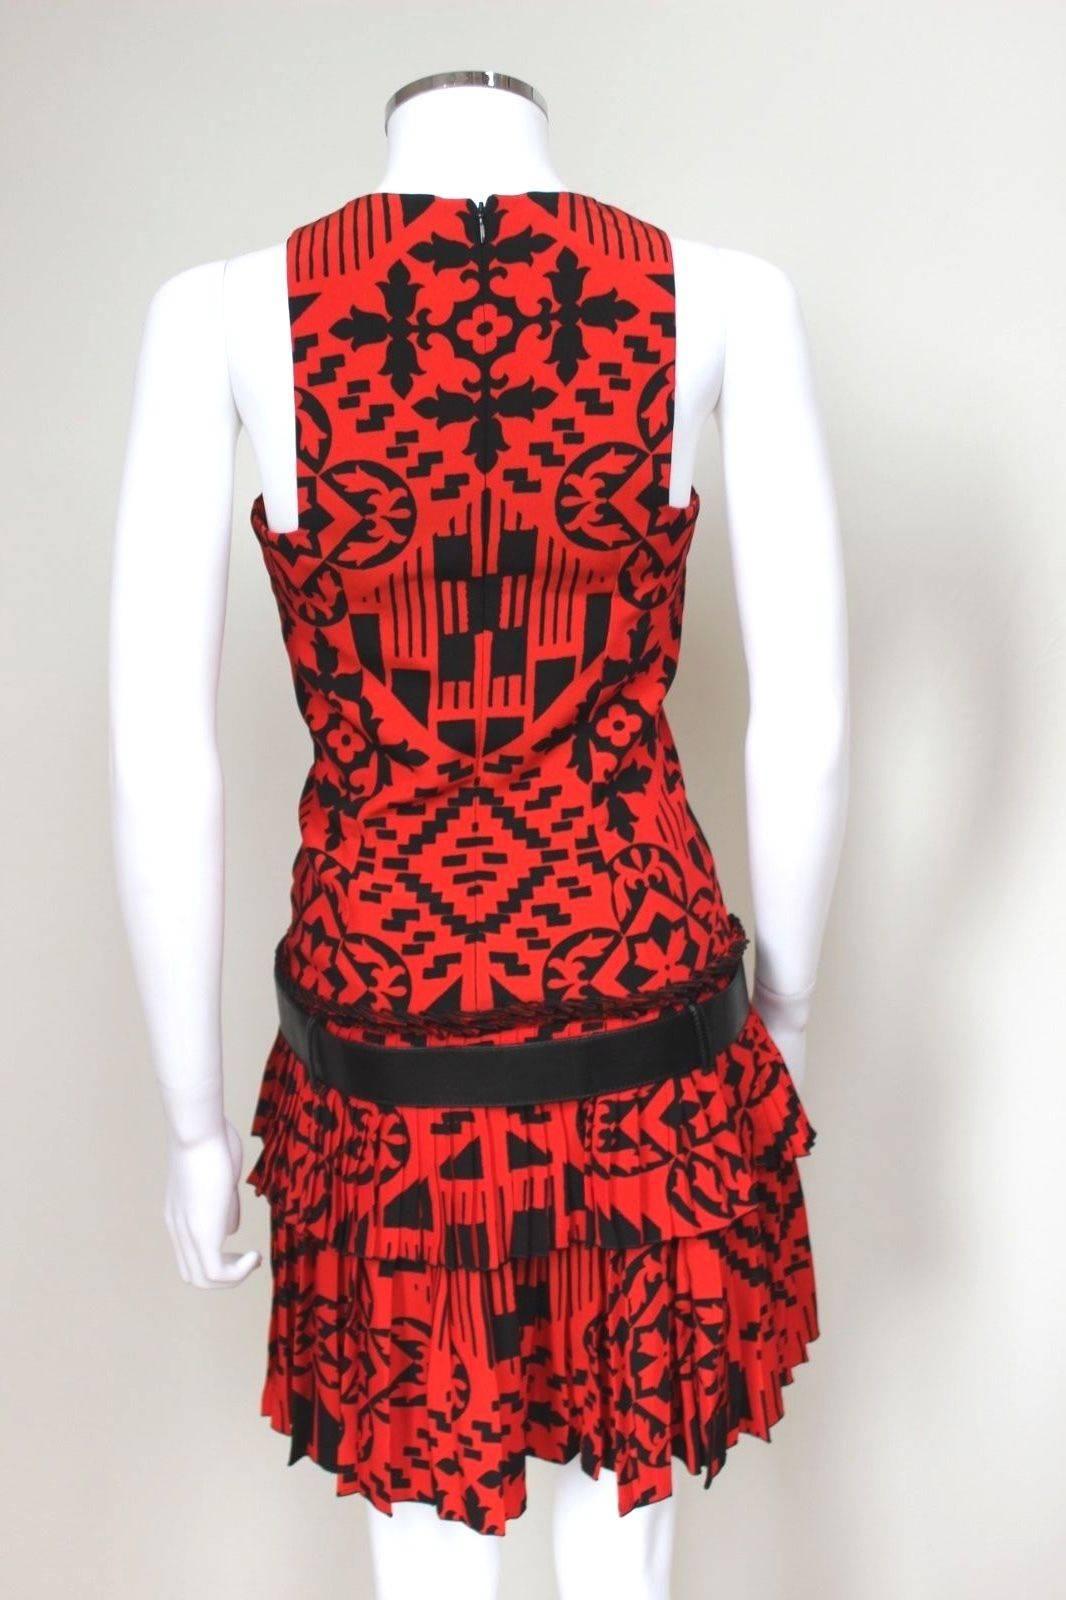 New Alexander McQueen Resort 2014 Red Print Pleated dress 38 uk 6-8  For Sale 1